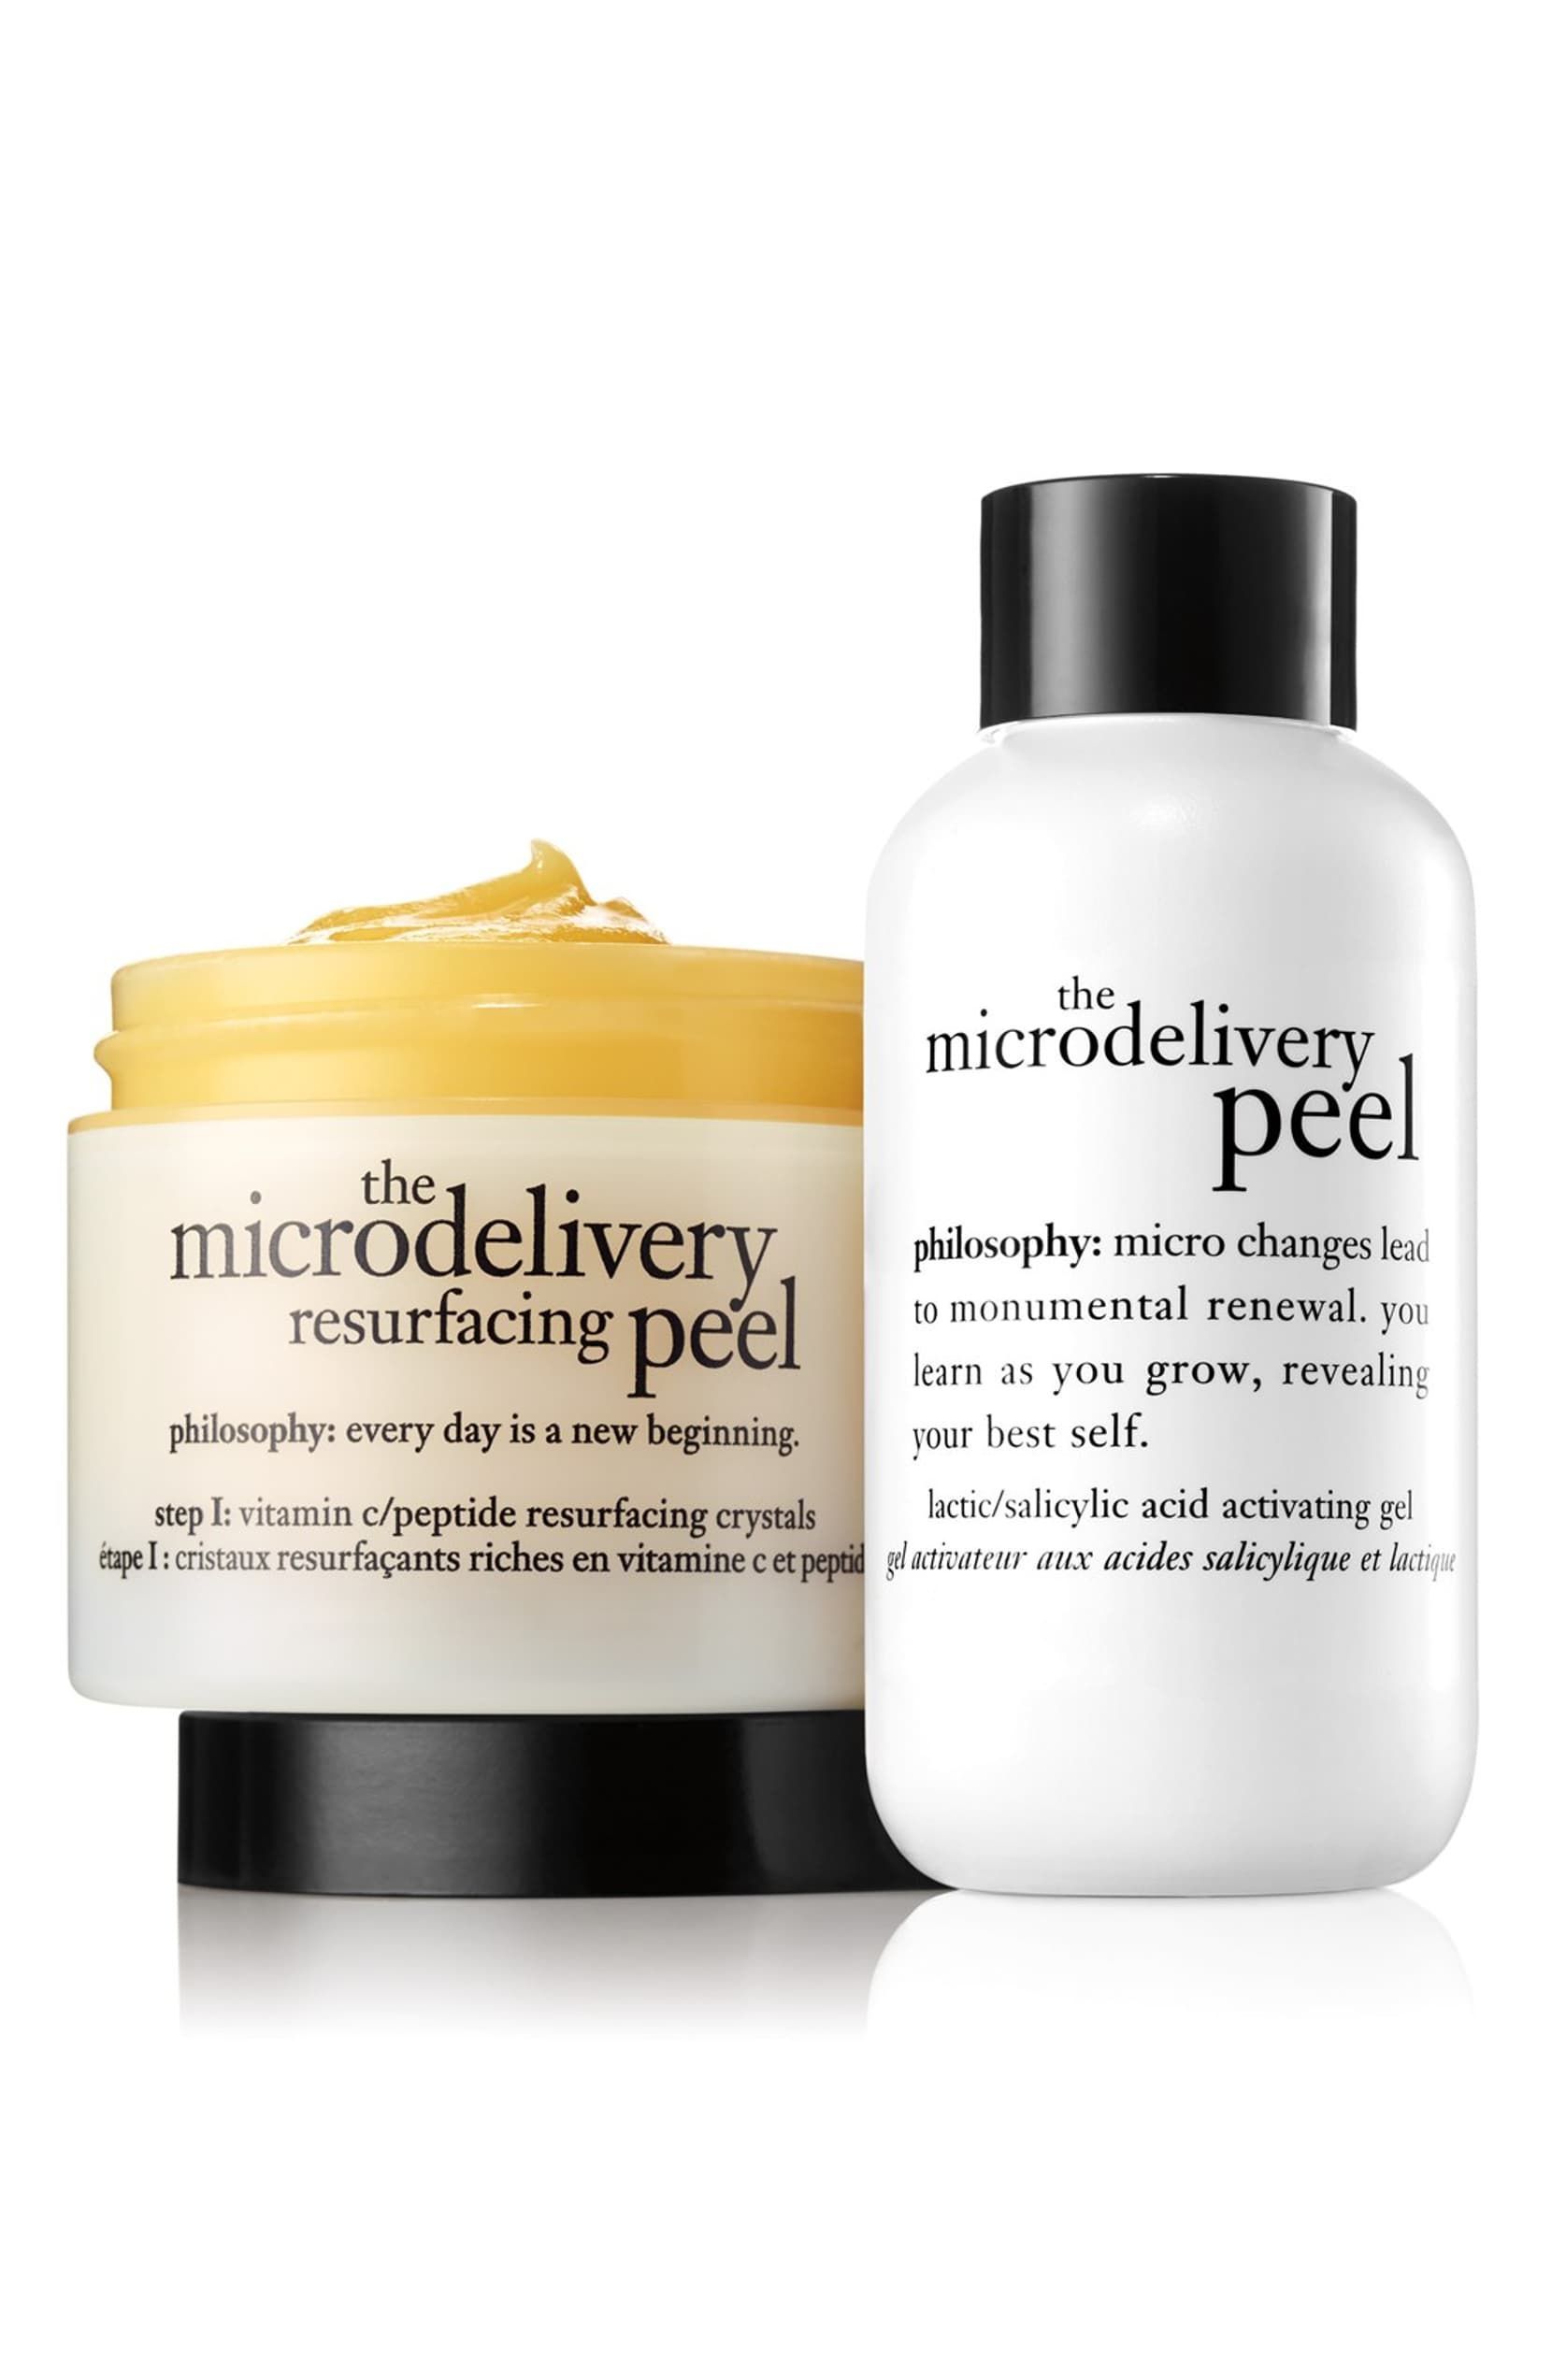 The Microdelivery Resurfacing Peel